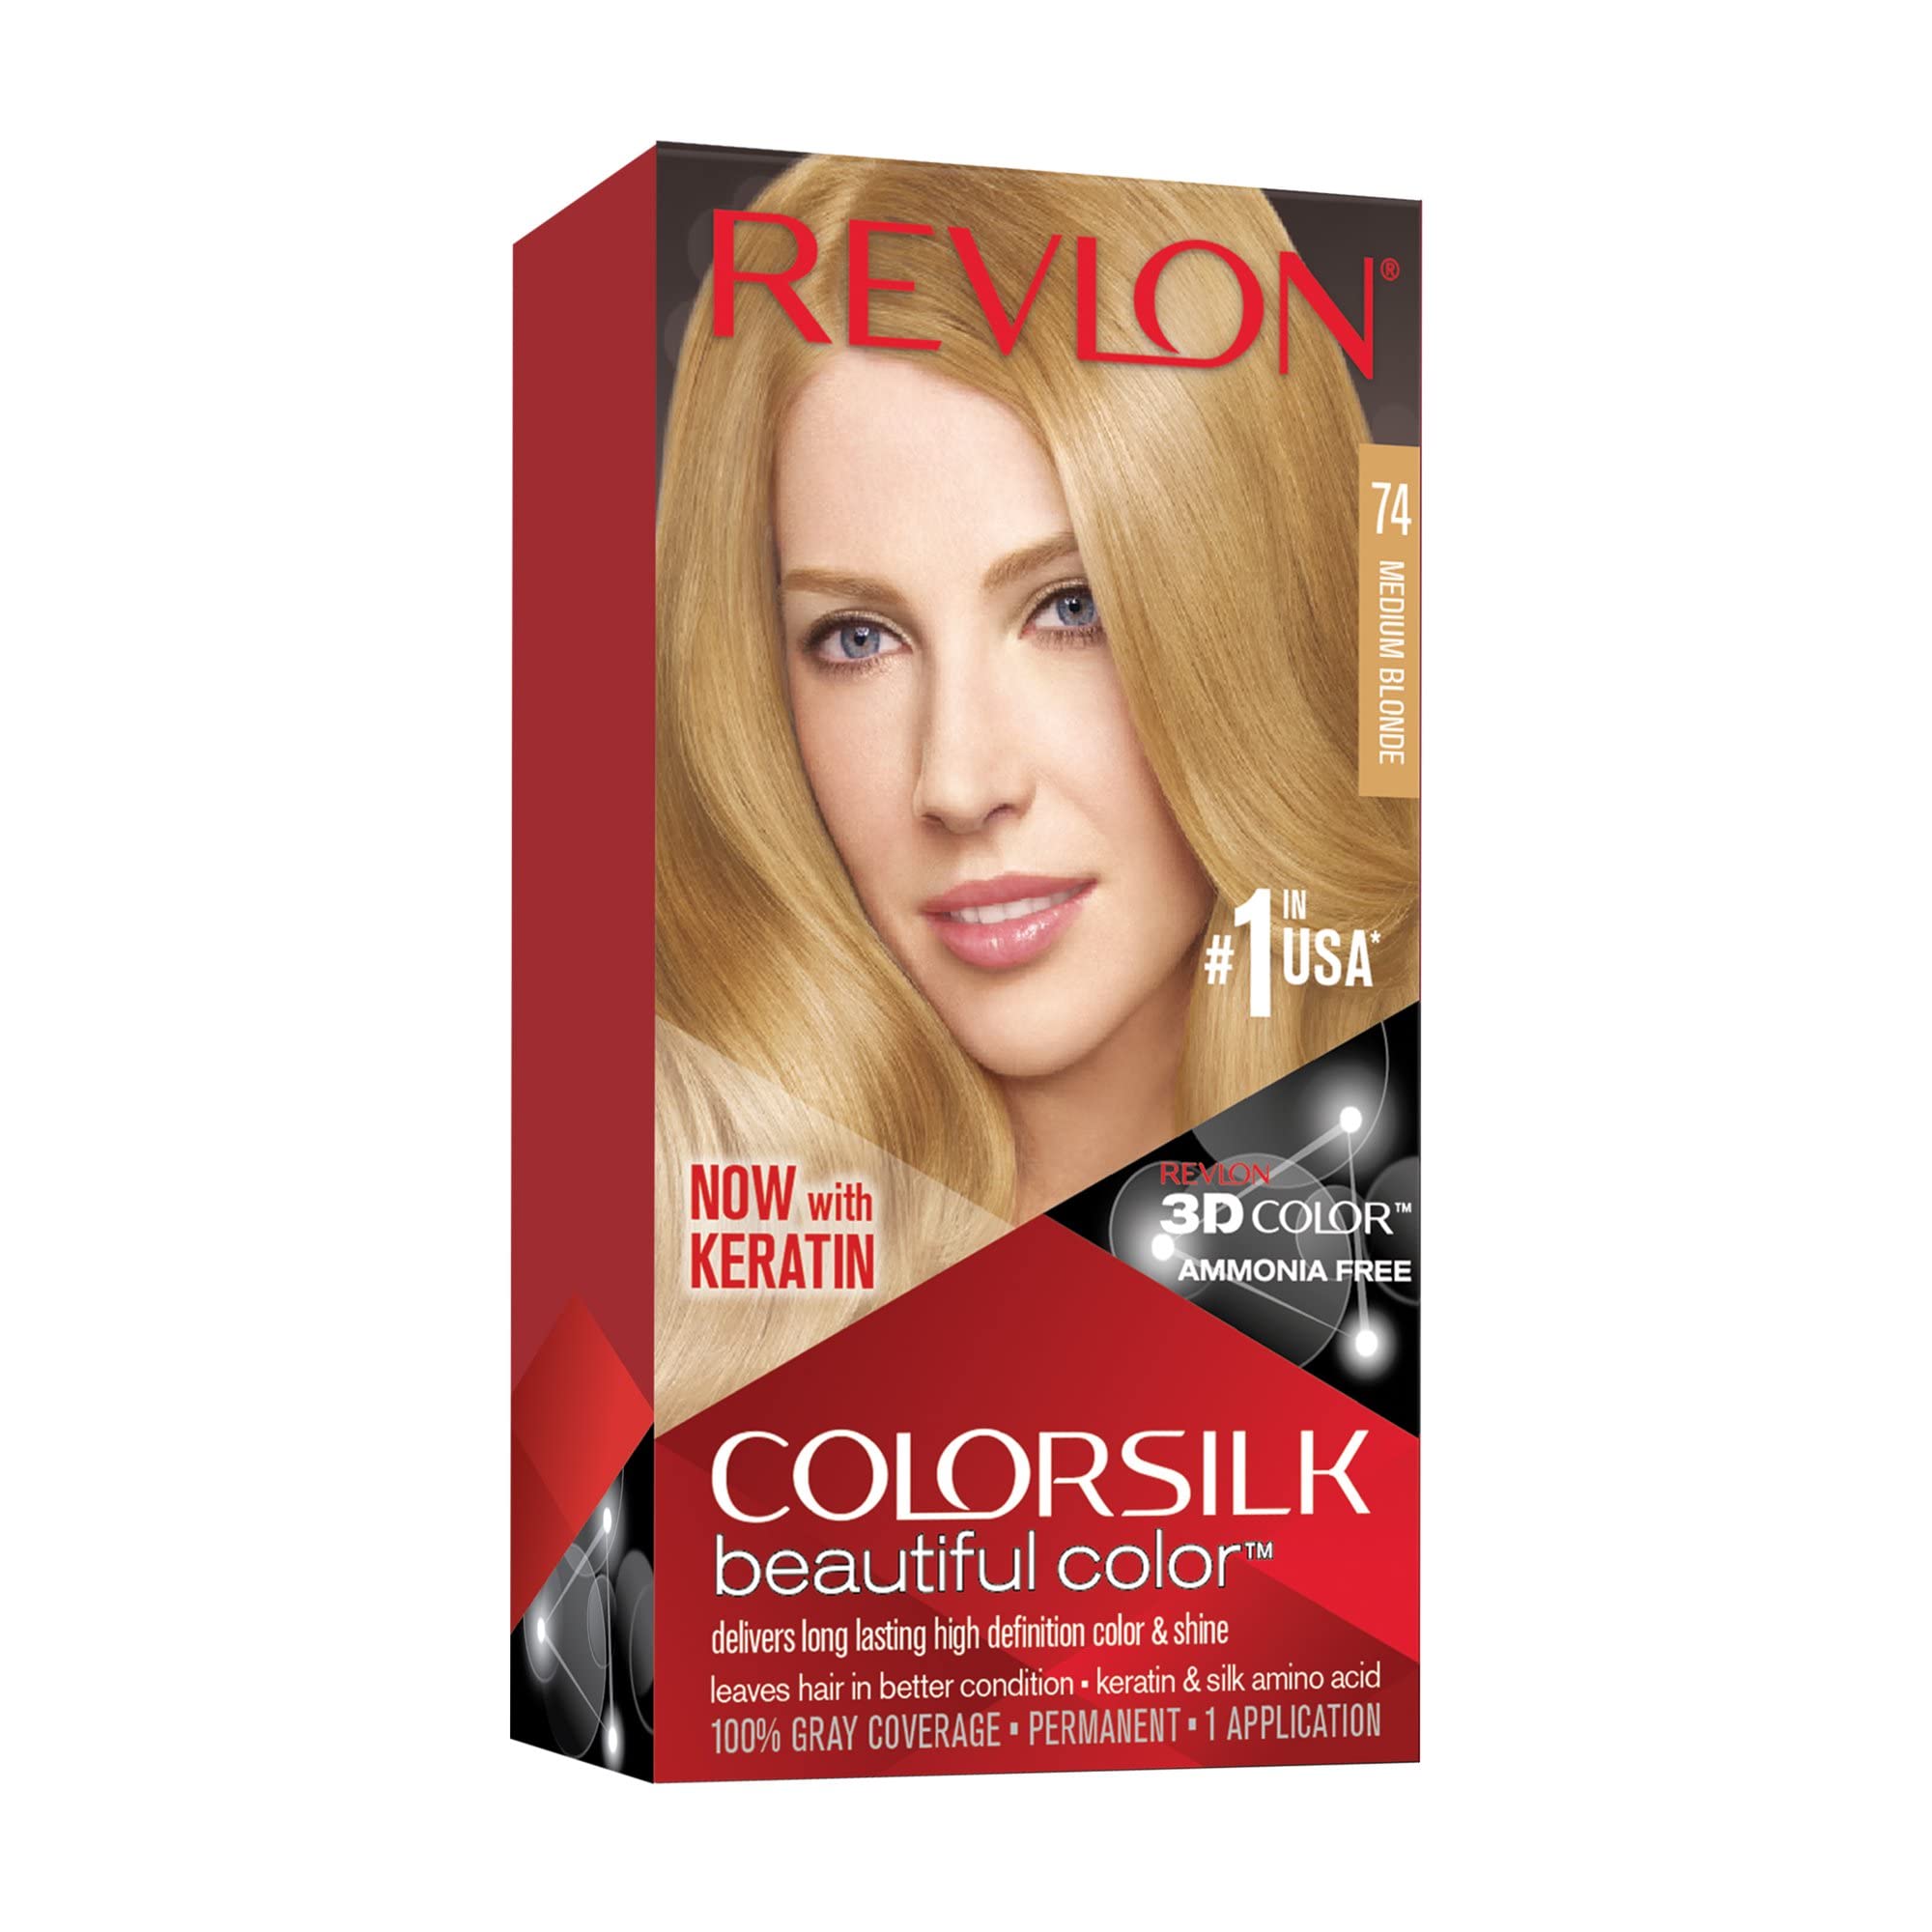 Revlon Colorsilk Hair Color 74 Medium Blonde USA - 1ct/3PK